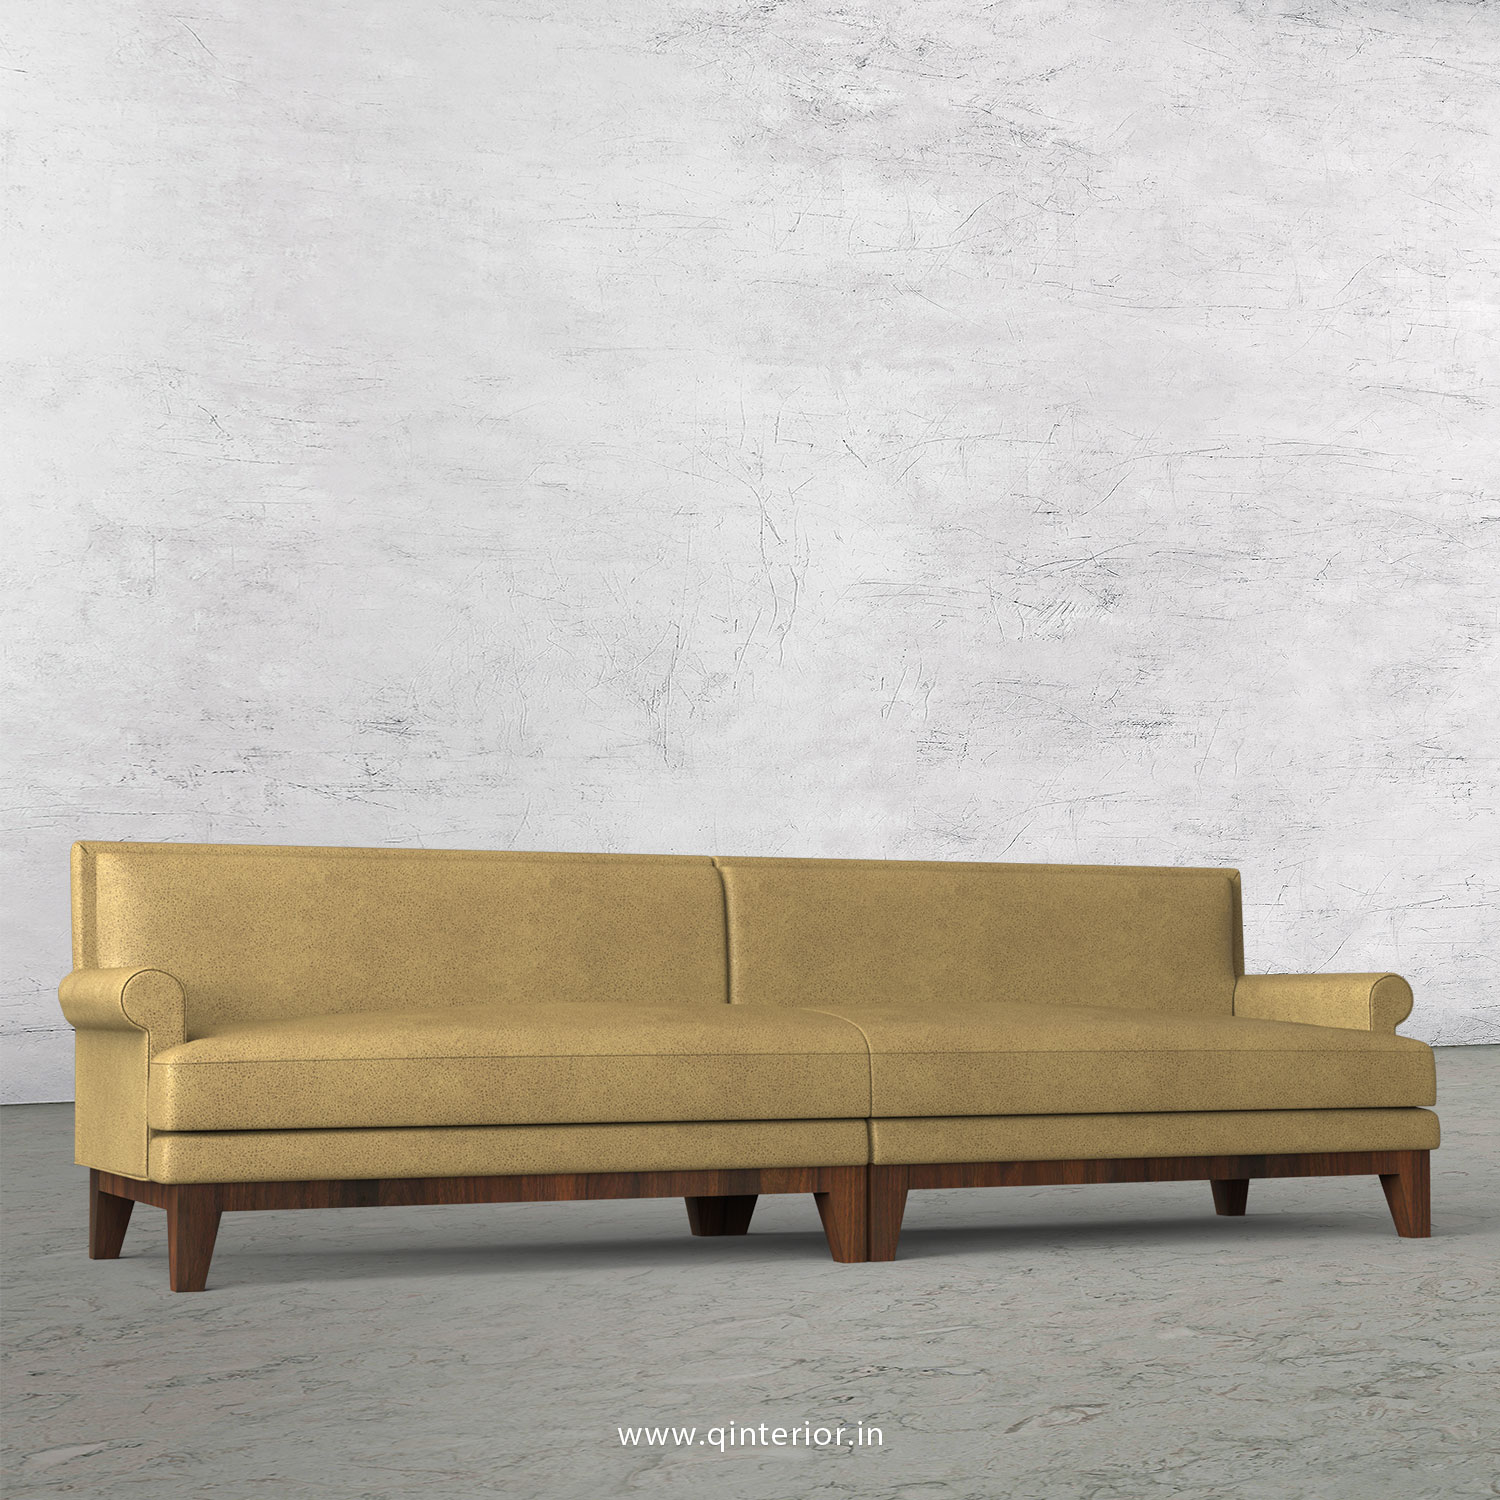 Aviana 4 Seater Sofa in Fab Leather Fabric - SFA001 FL01